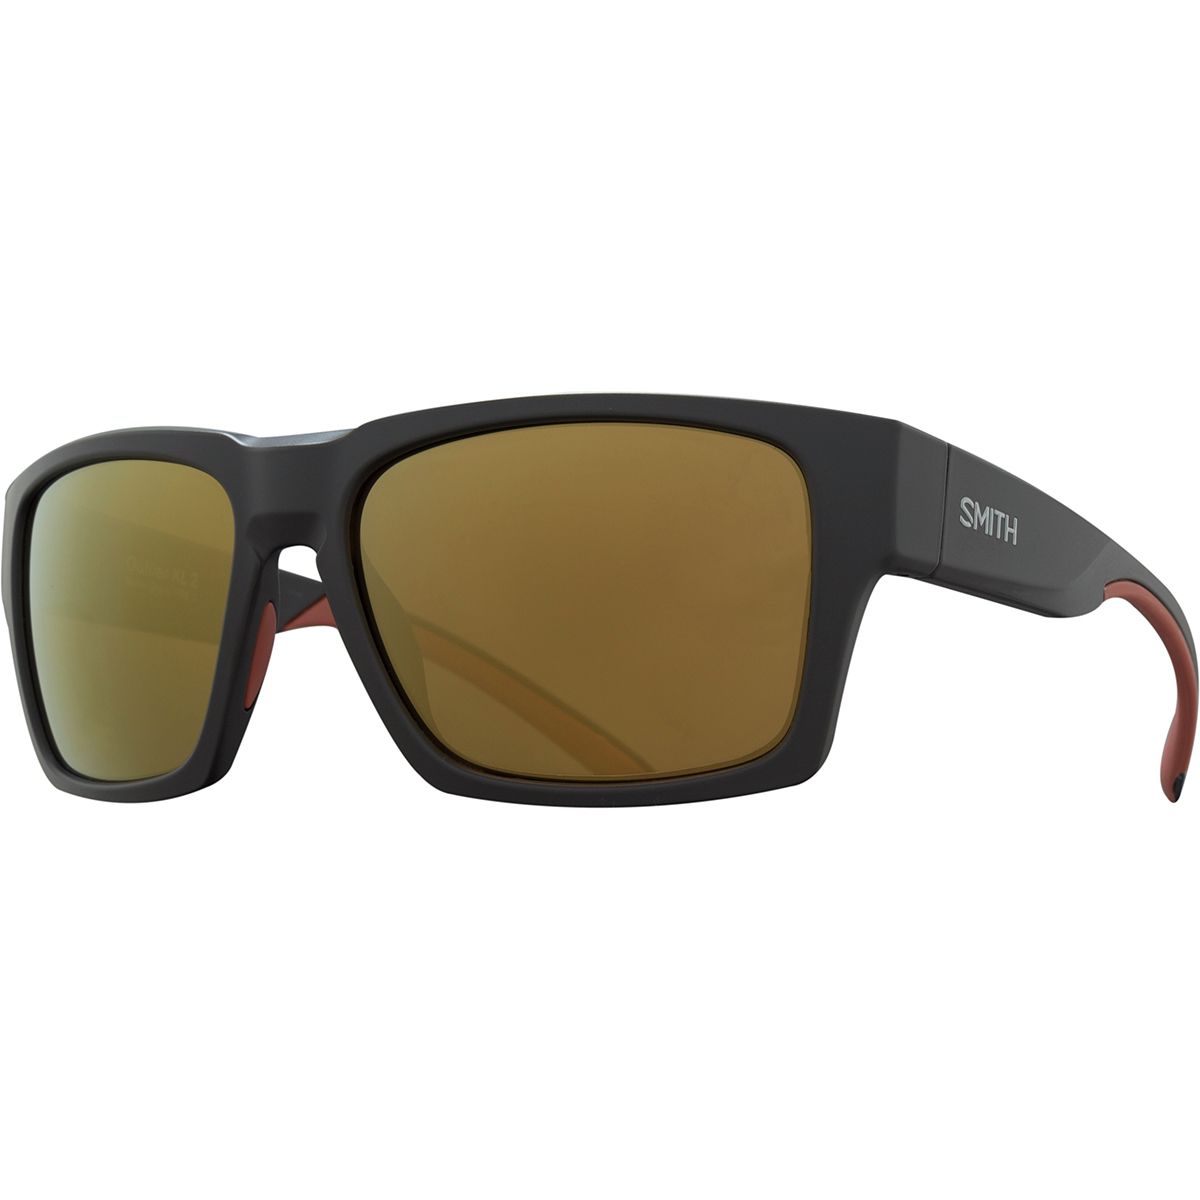 Smith Outlier 2 XL ChromaPop Sunglasses - Men's